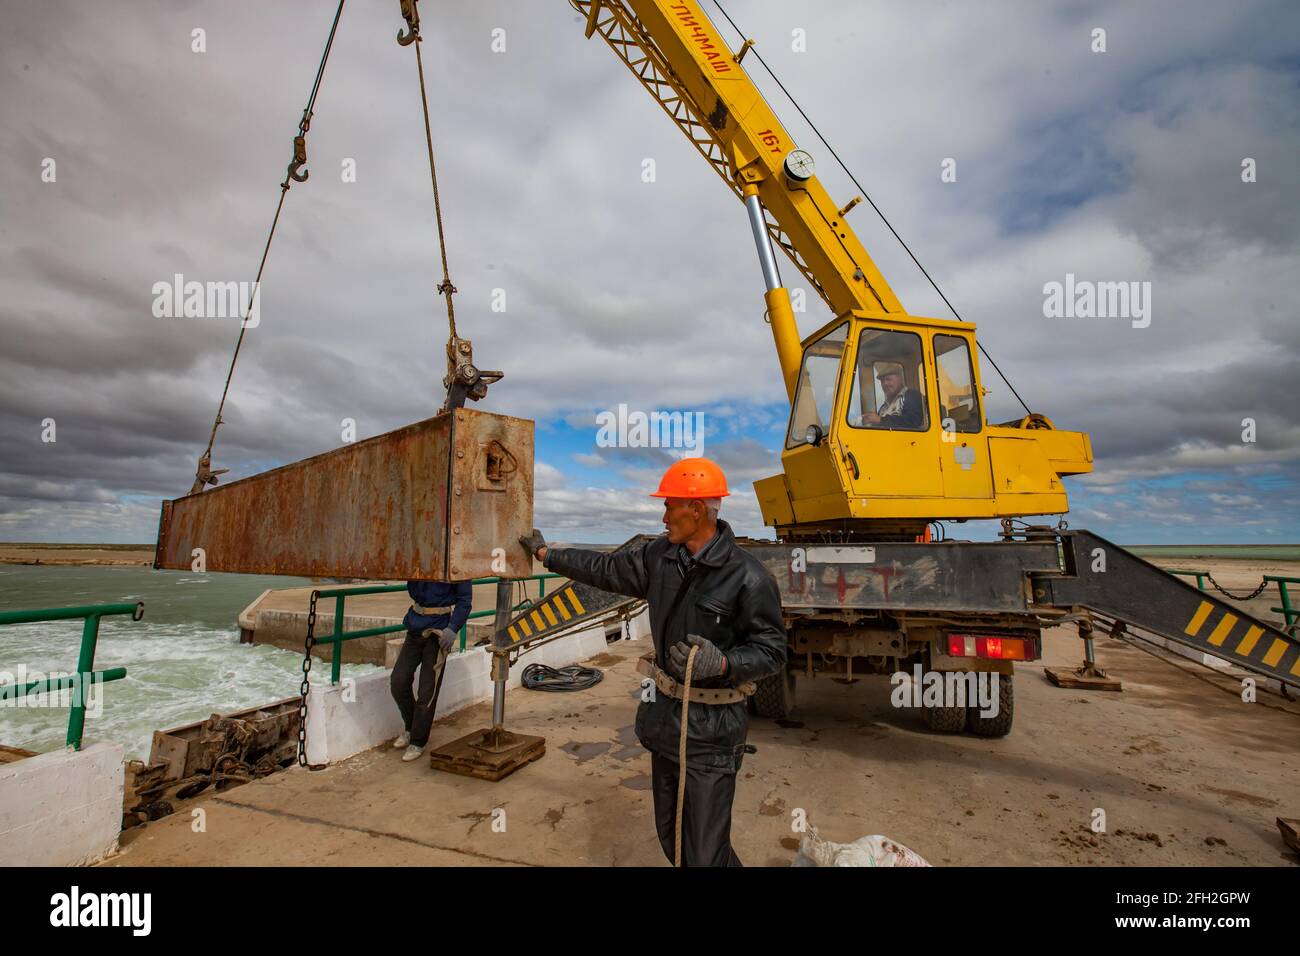 Kok-aral,Kazakhstan:Small Aral Sea Kok-aral dam.Lifting water shutter weighting agent(girder).Yellow mobile crane.Adult Asian worker in orange hardhat Stock Photo